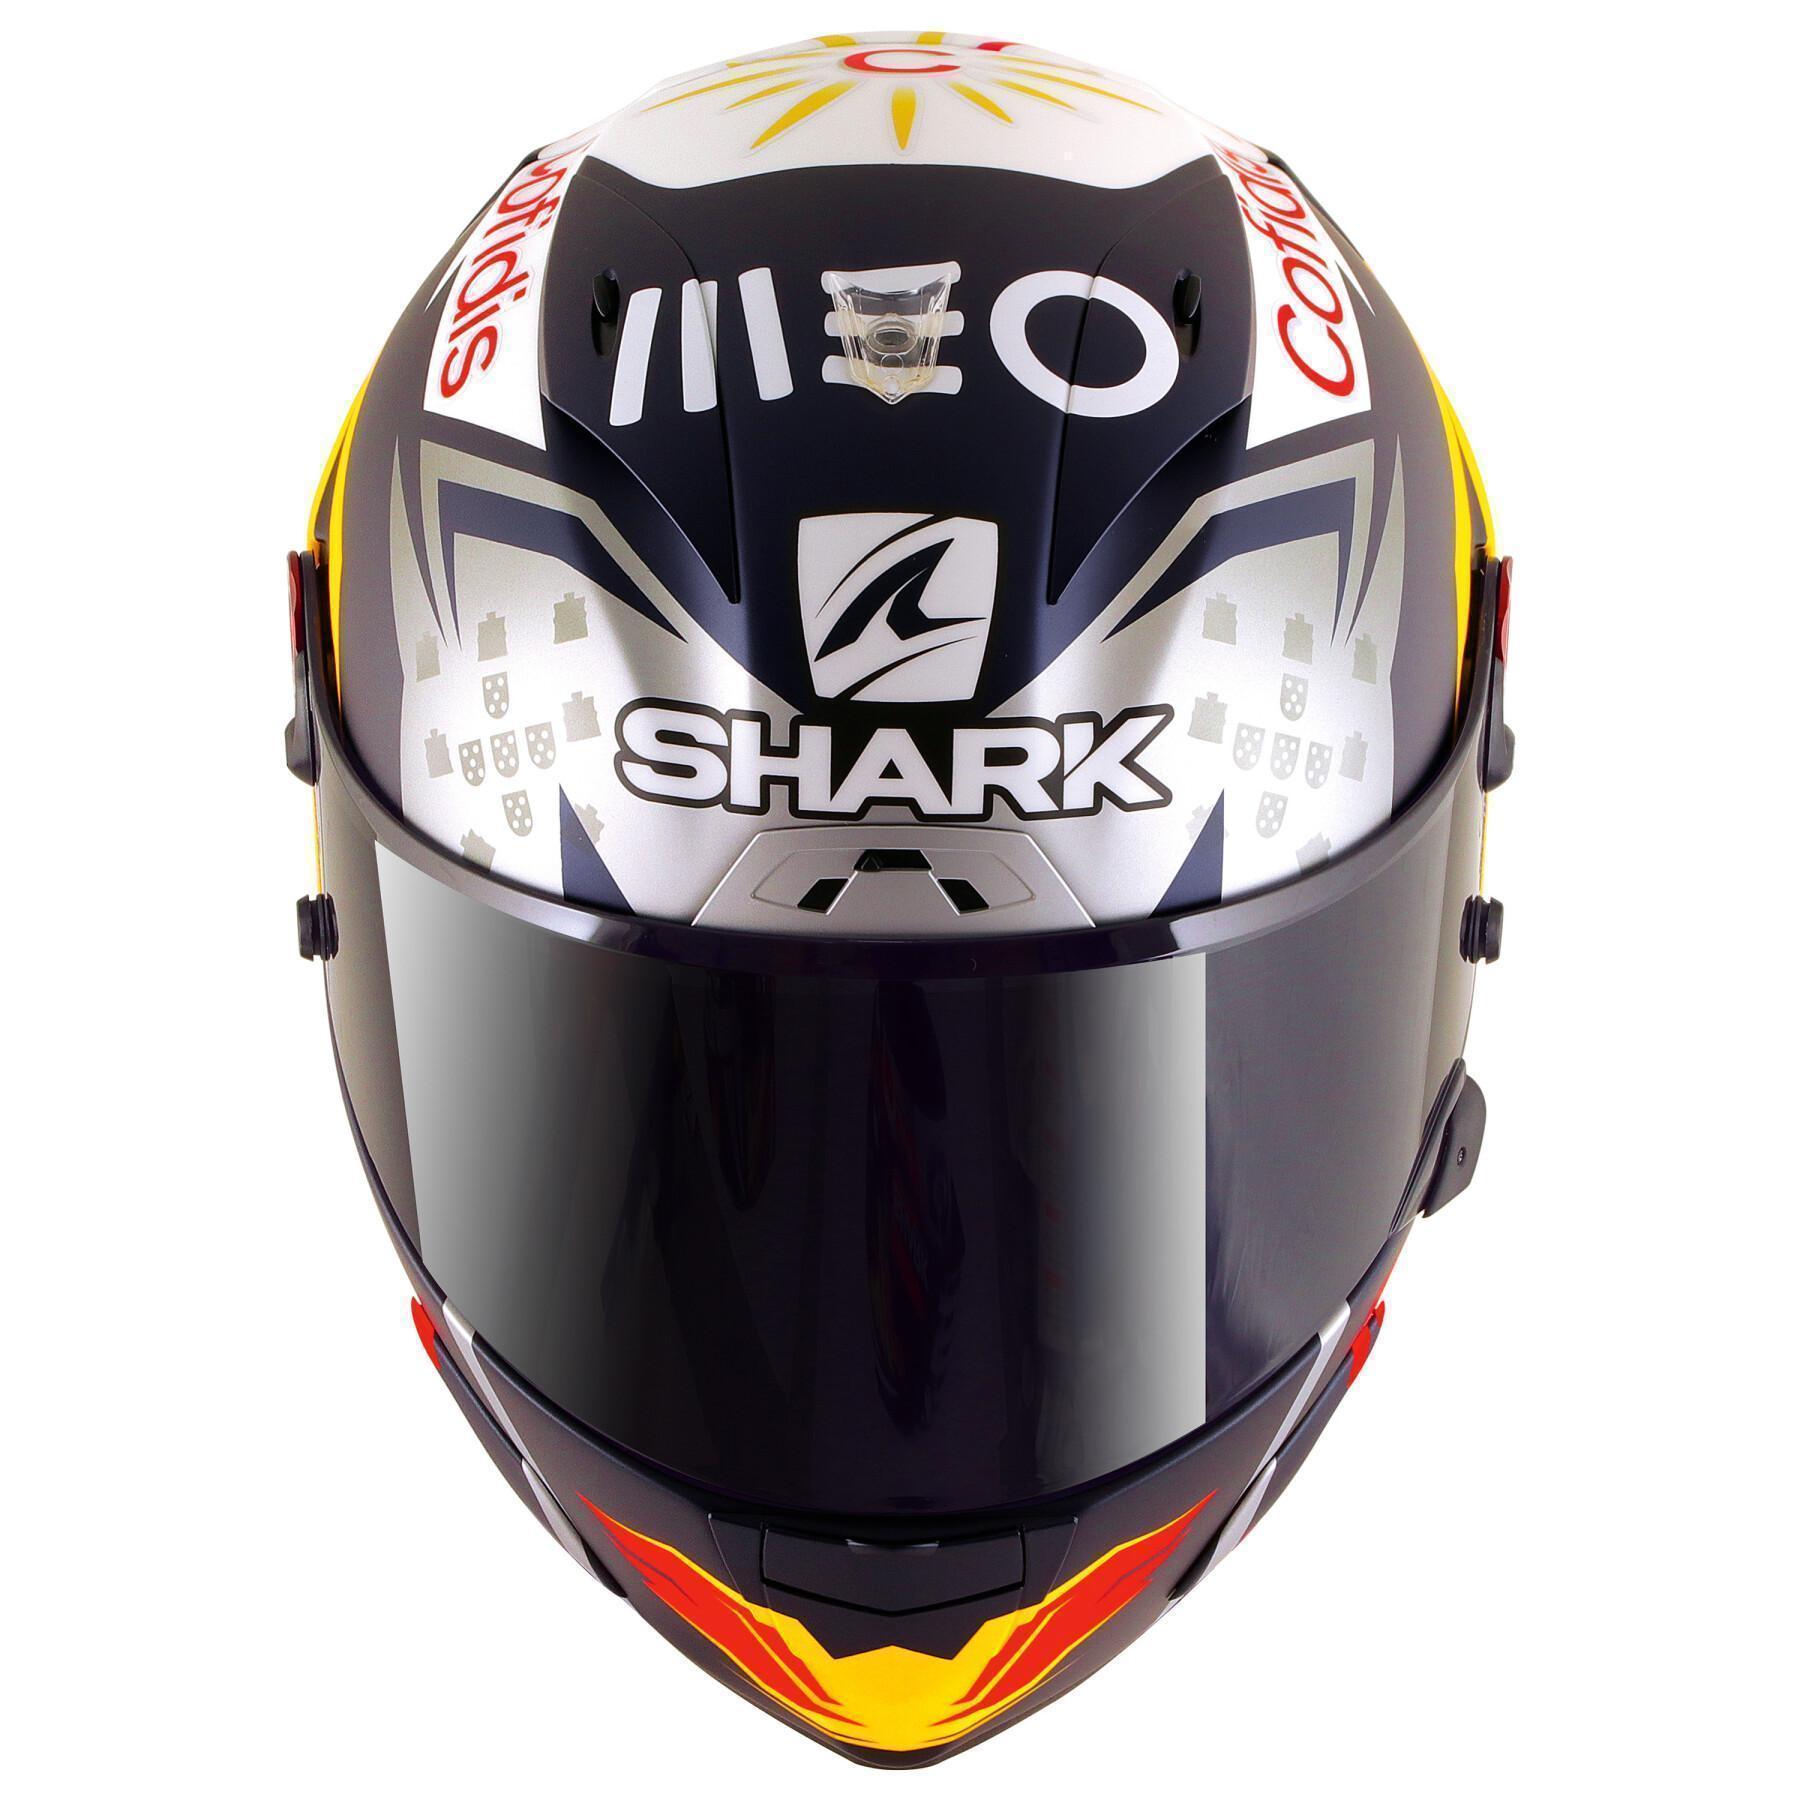 Casco integrale da moto Shark race-r pro GP oliveira signature